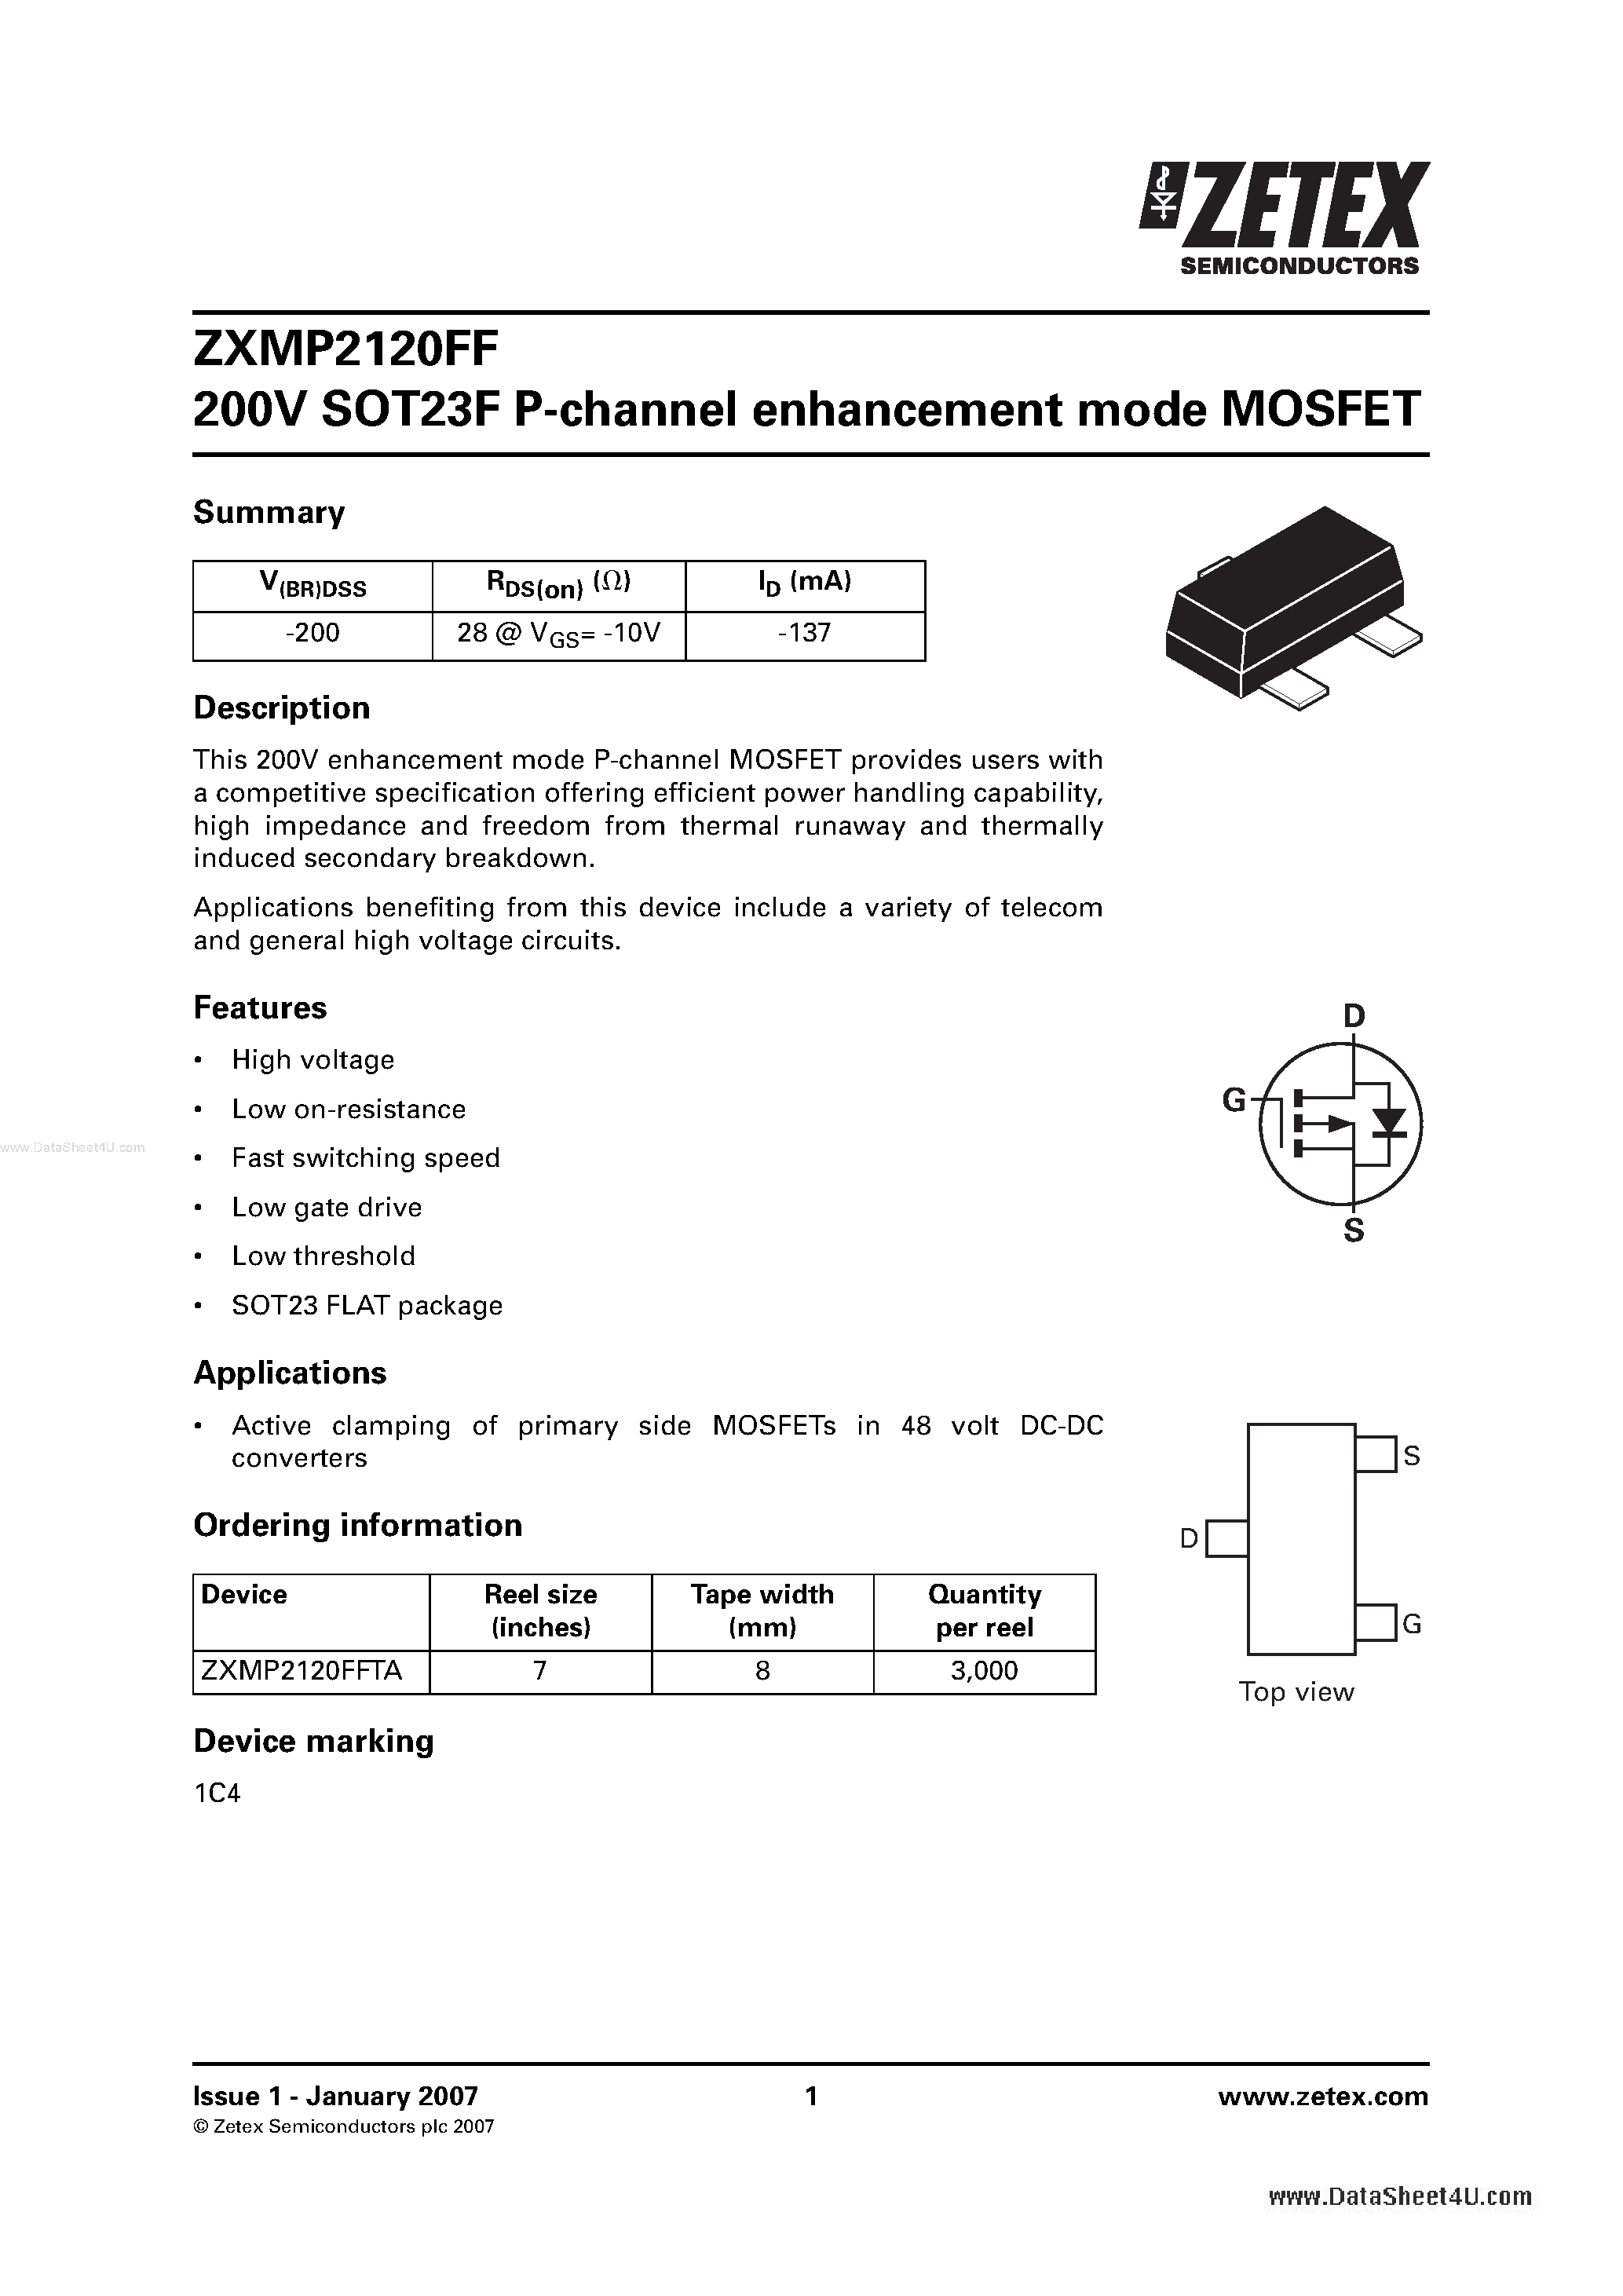 Datasheet ZXMP2120FF - 200V SOT23 P-channel enhancement mode MOSFET page 1